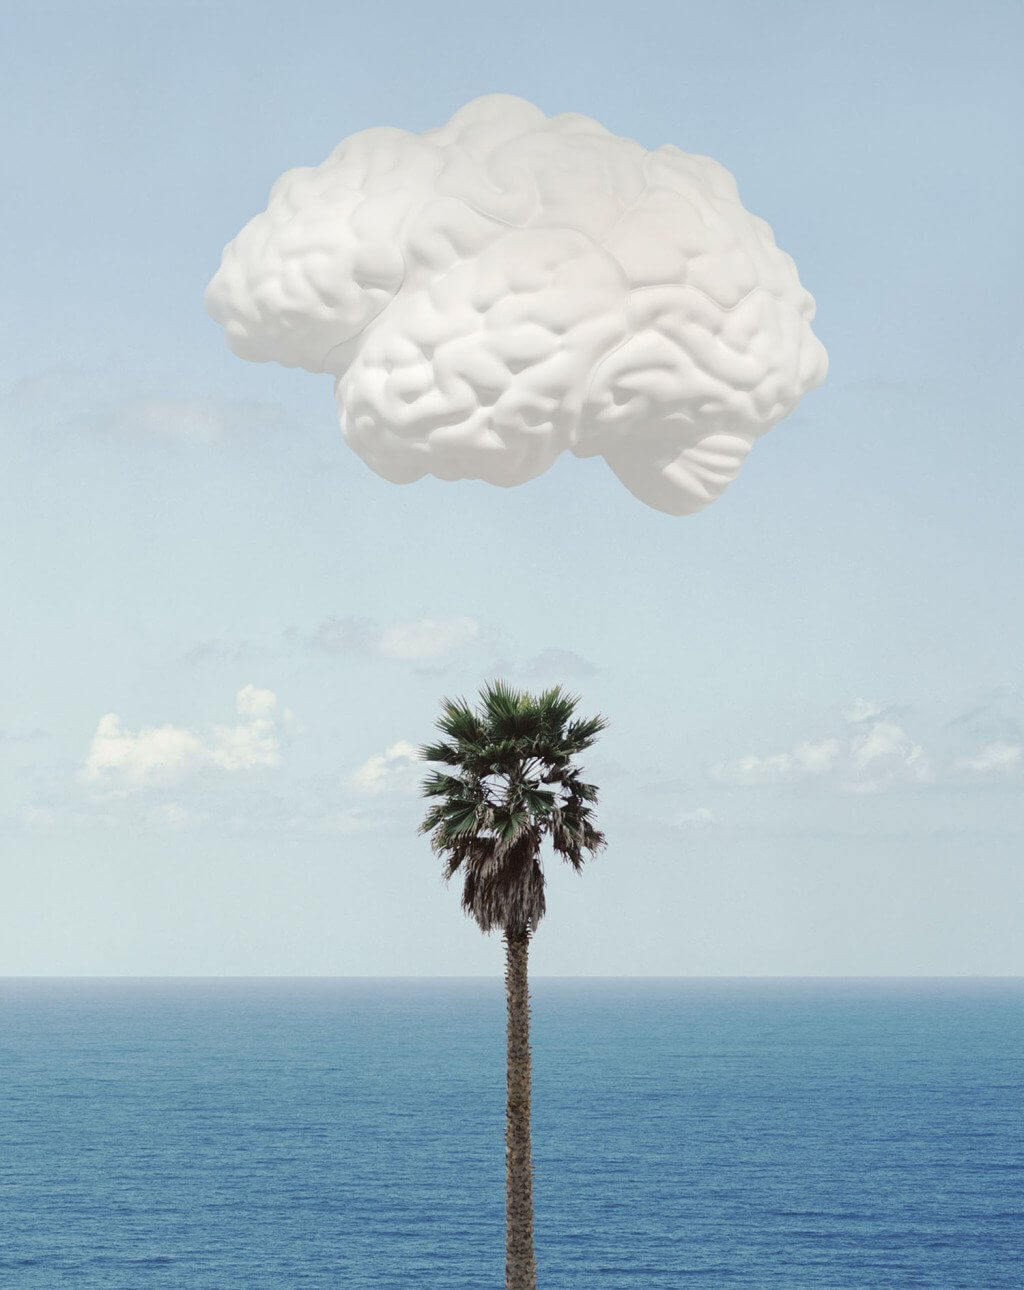 John Baldessari, Brain:Cloud (With Seascape and Palm Tree), 2009